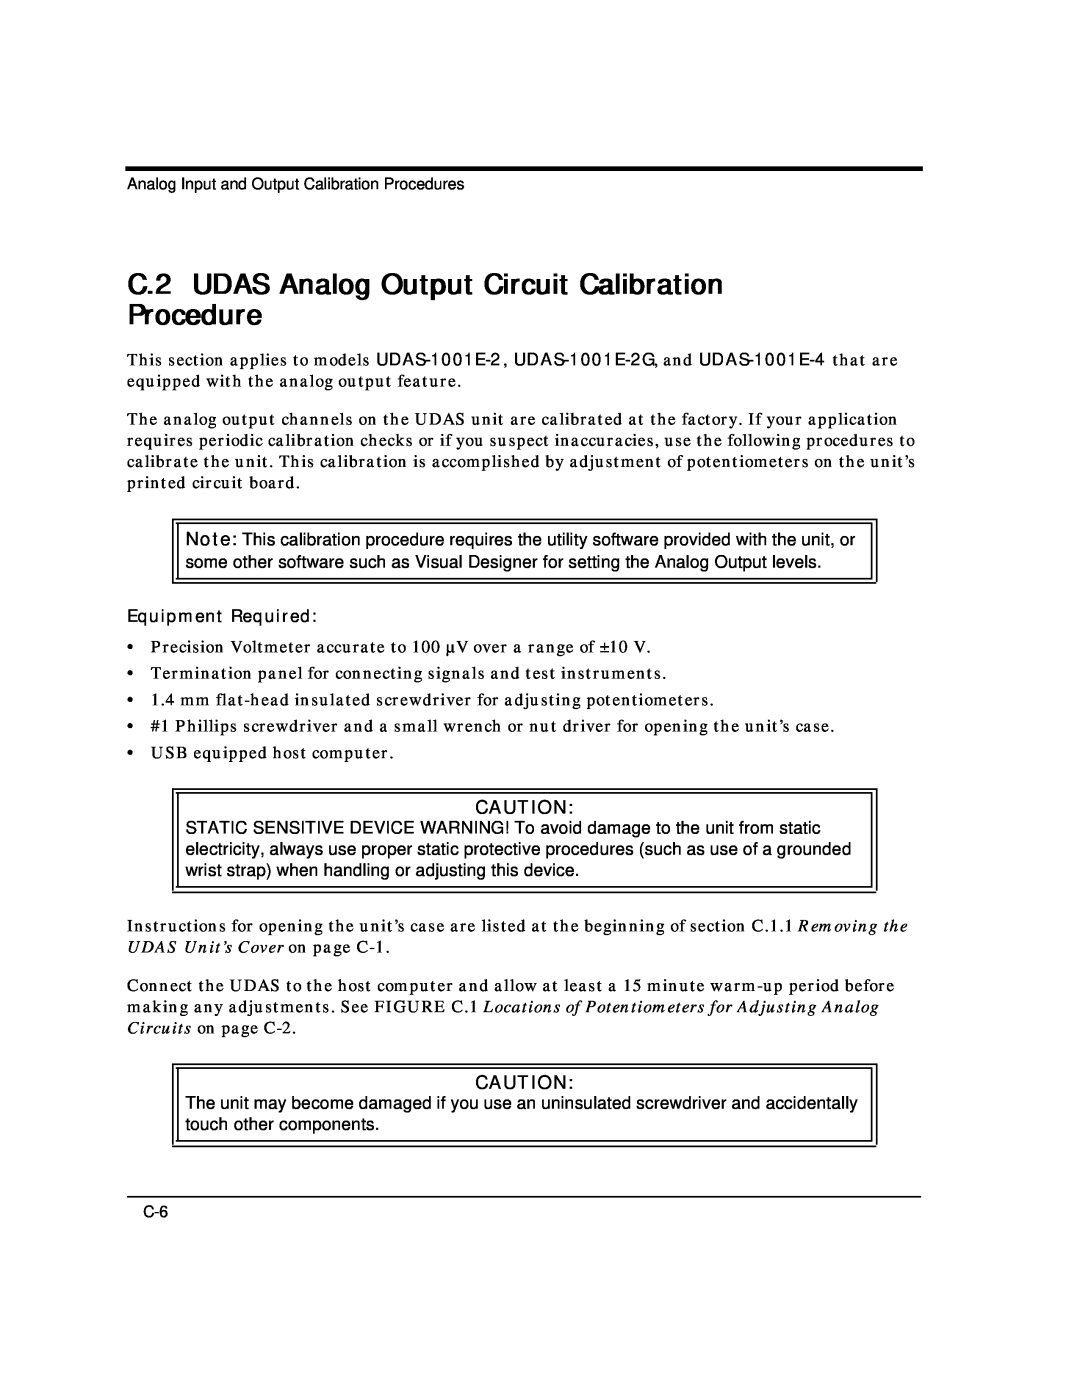 Intelligent Motion Systems UDAS-1001E user manual C.2 UDAS Analog Output Circuit Calibration Procedure, Equipment Required 